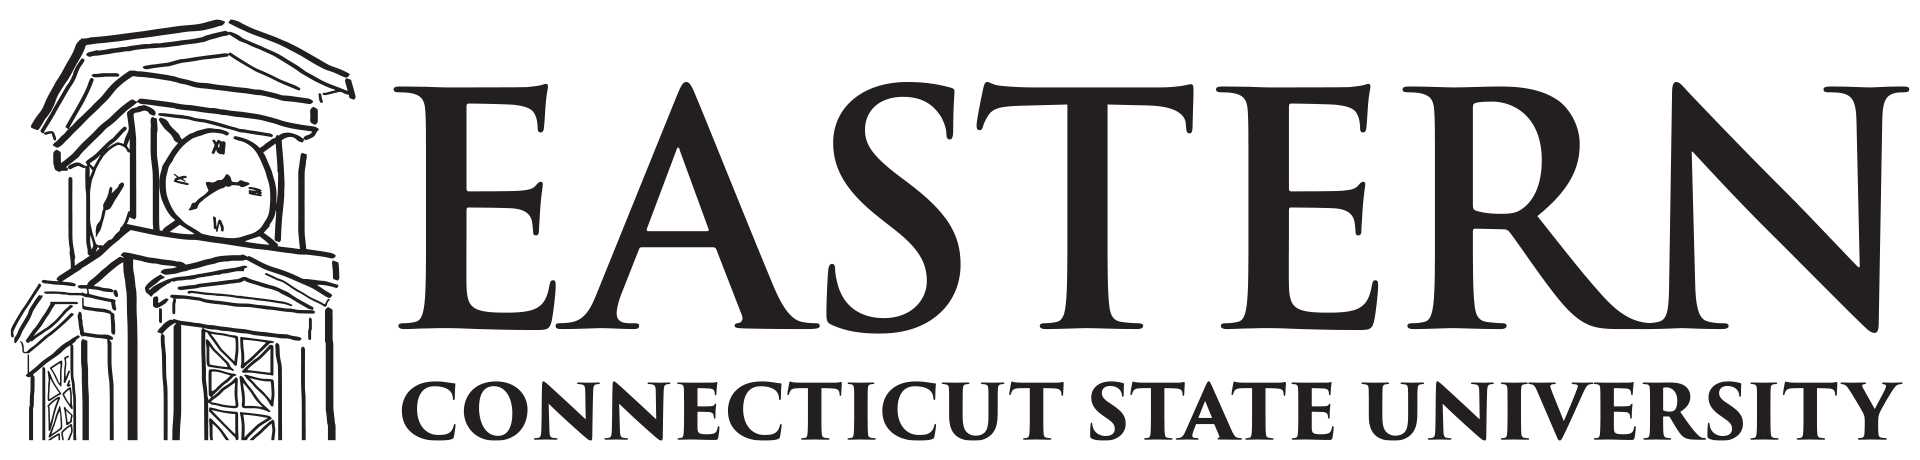 Eastern Logo, Black